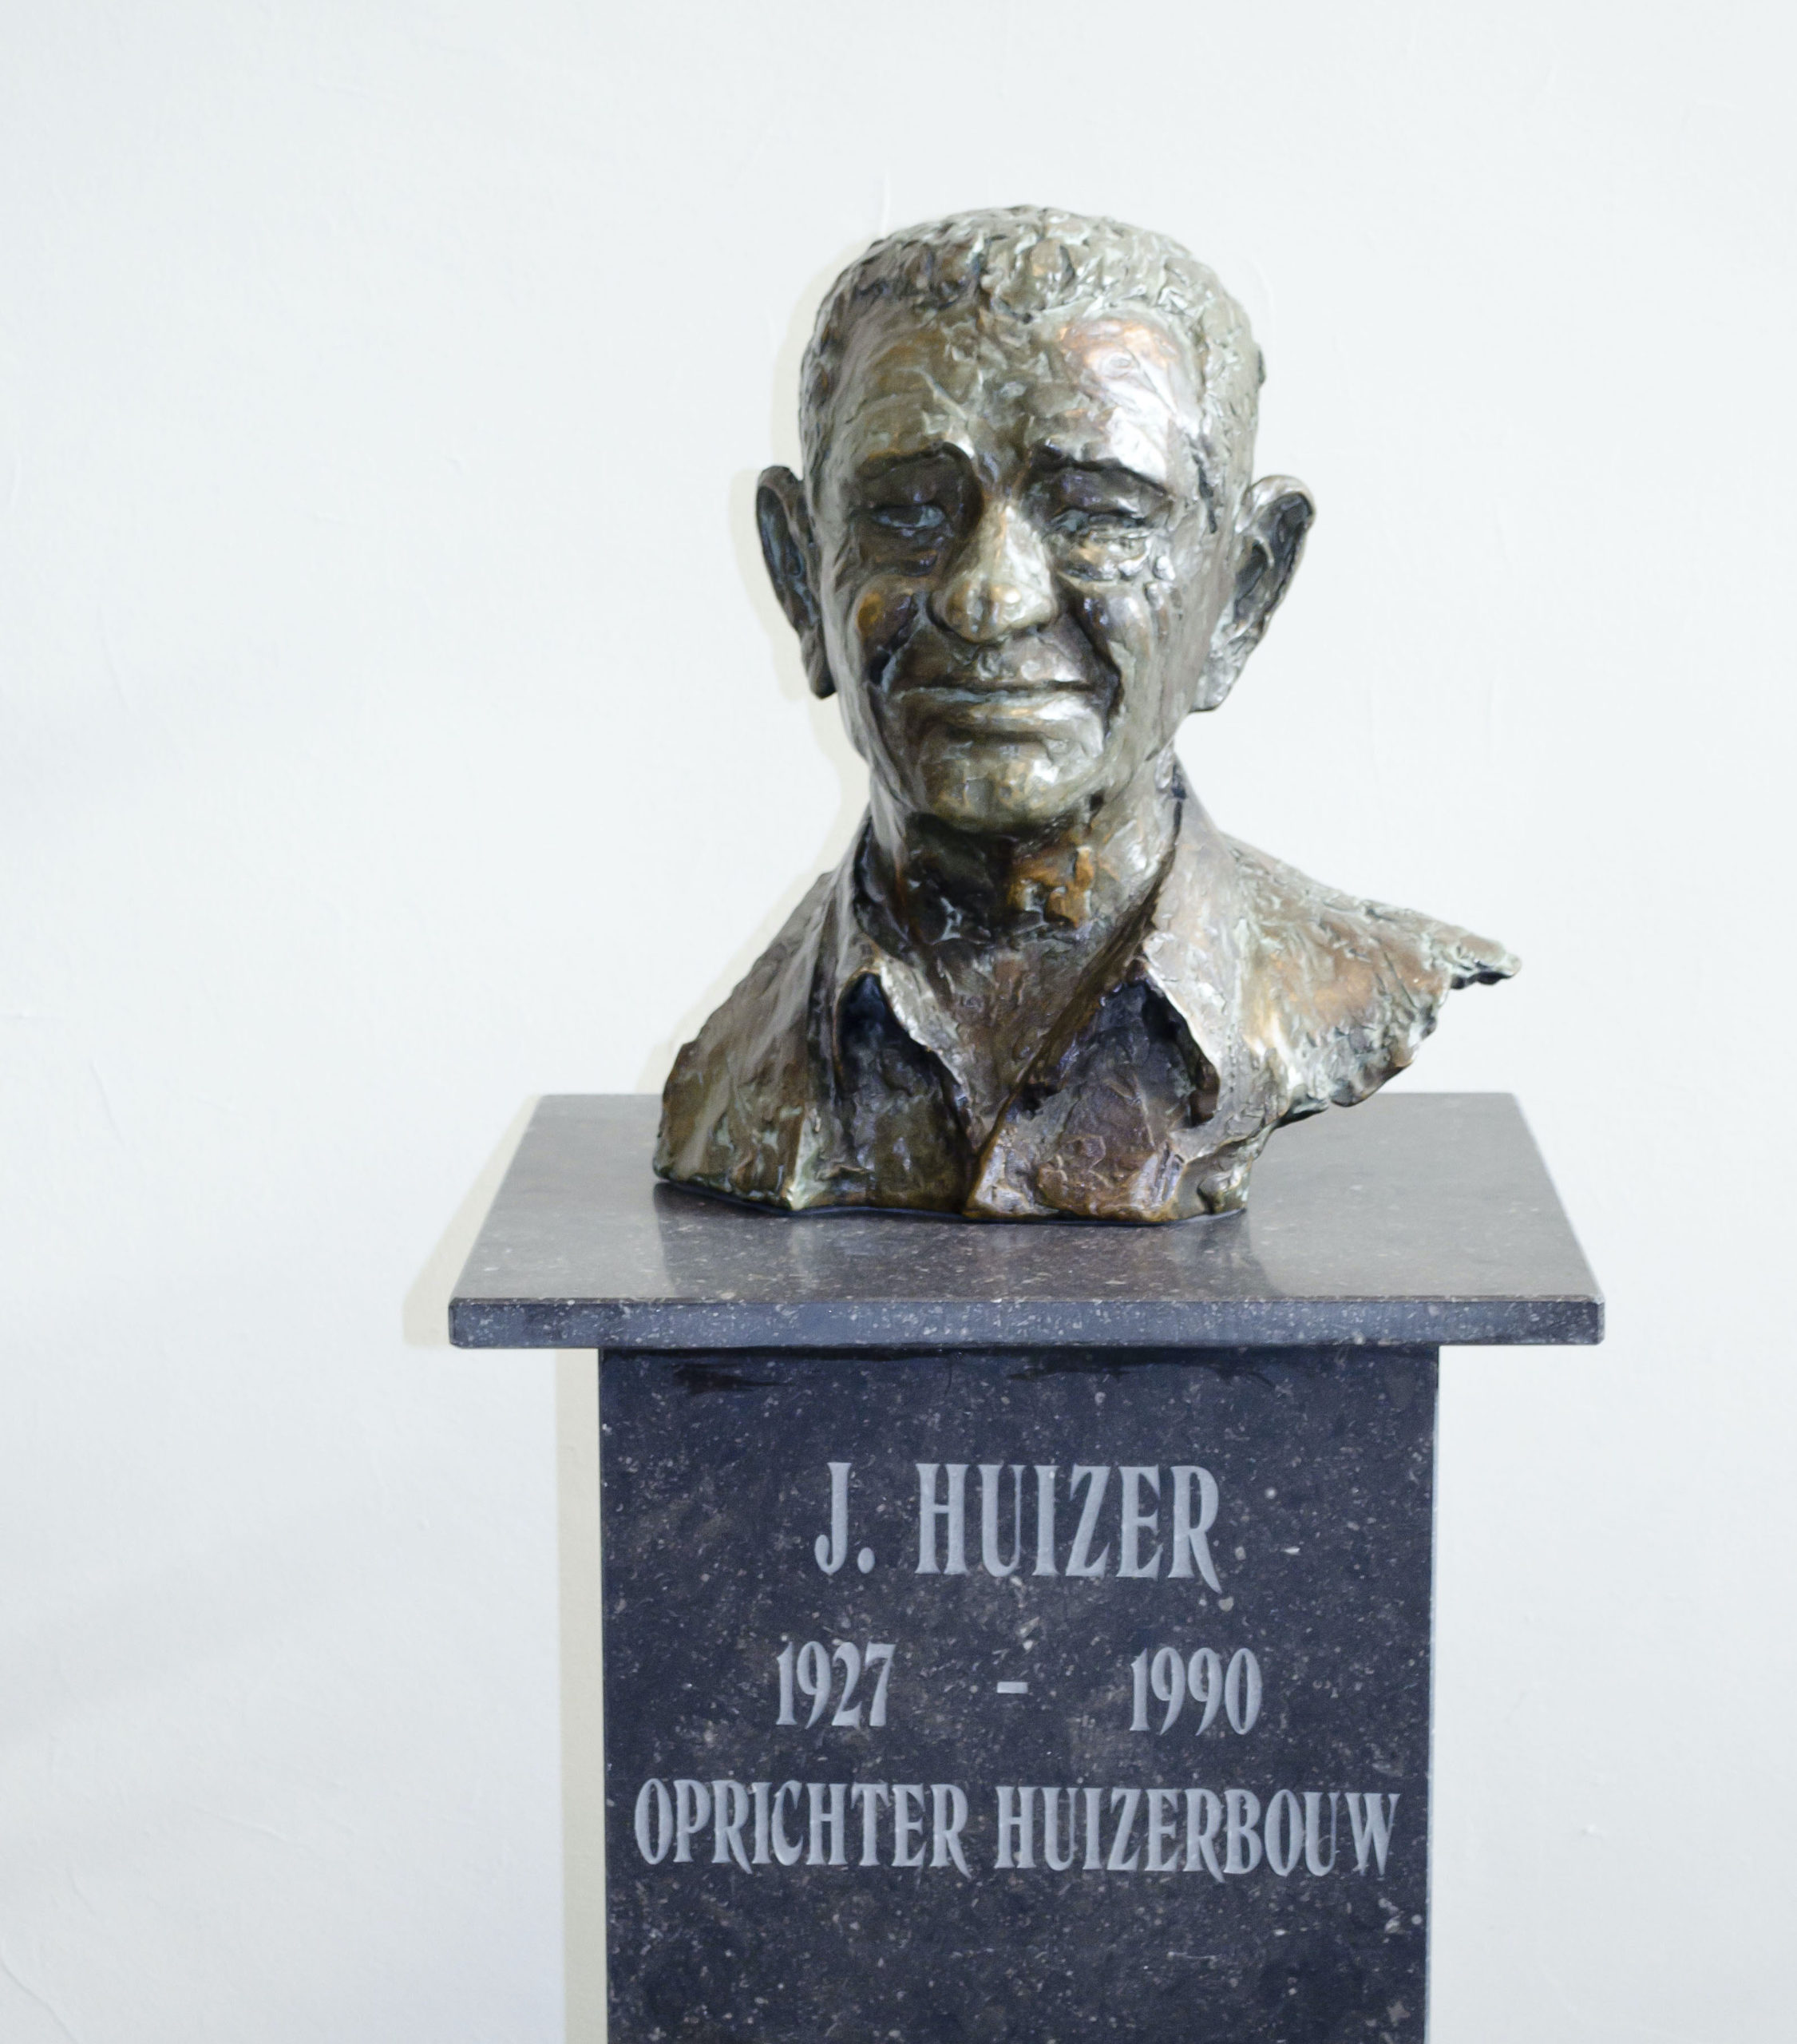 J. Huizer